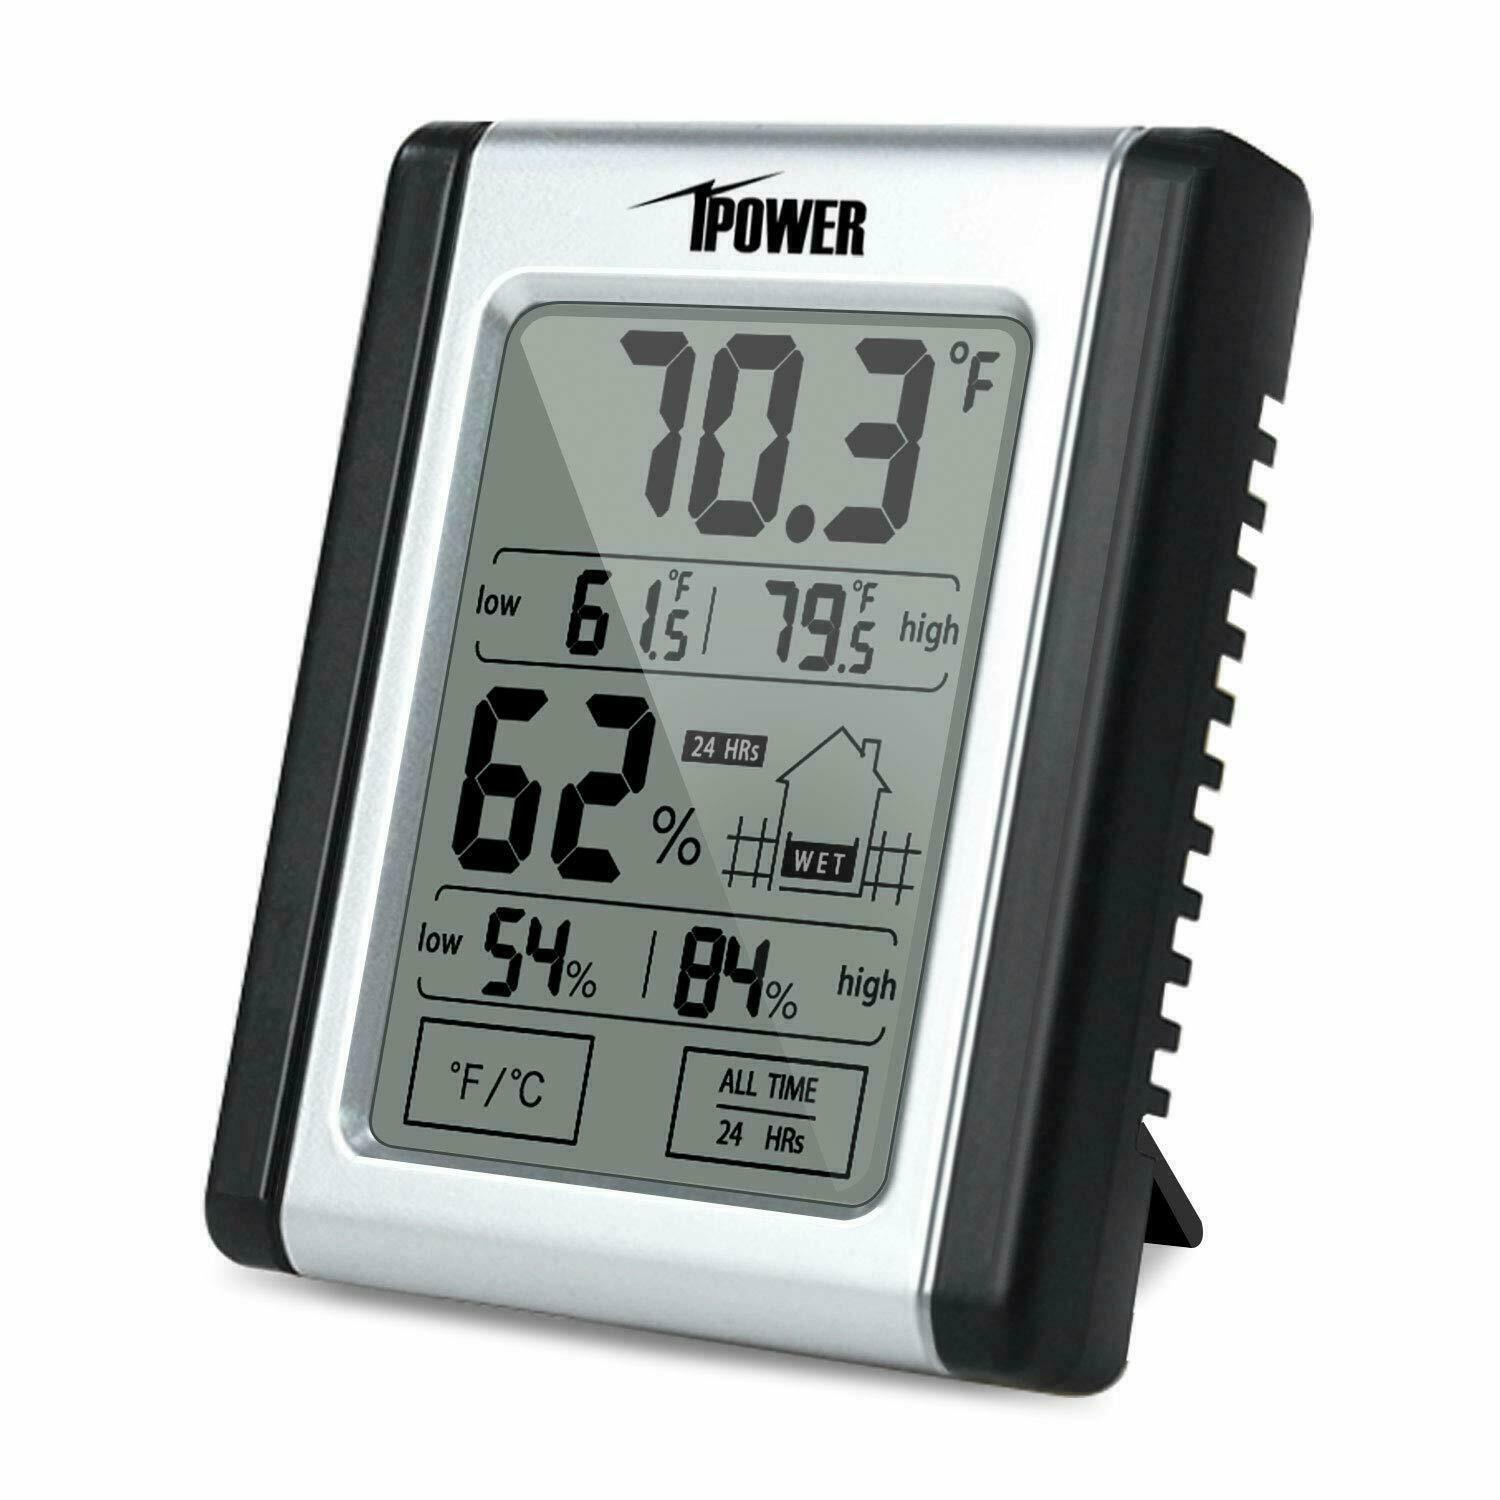 iPower Digital Hygrometer Indoor Thermometer Humidity Temperature Monitor Gauge 